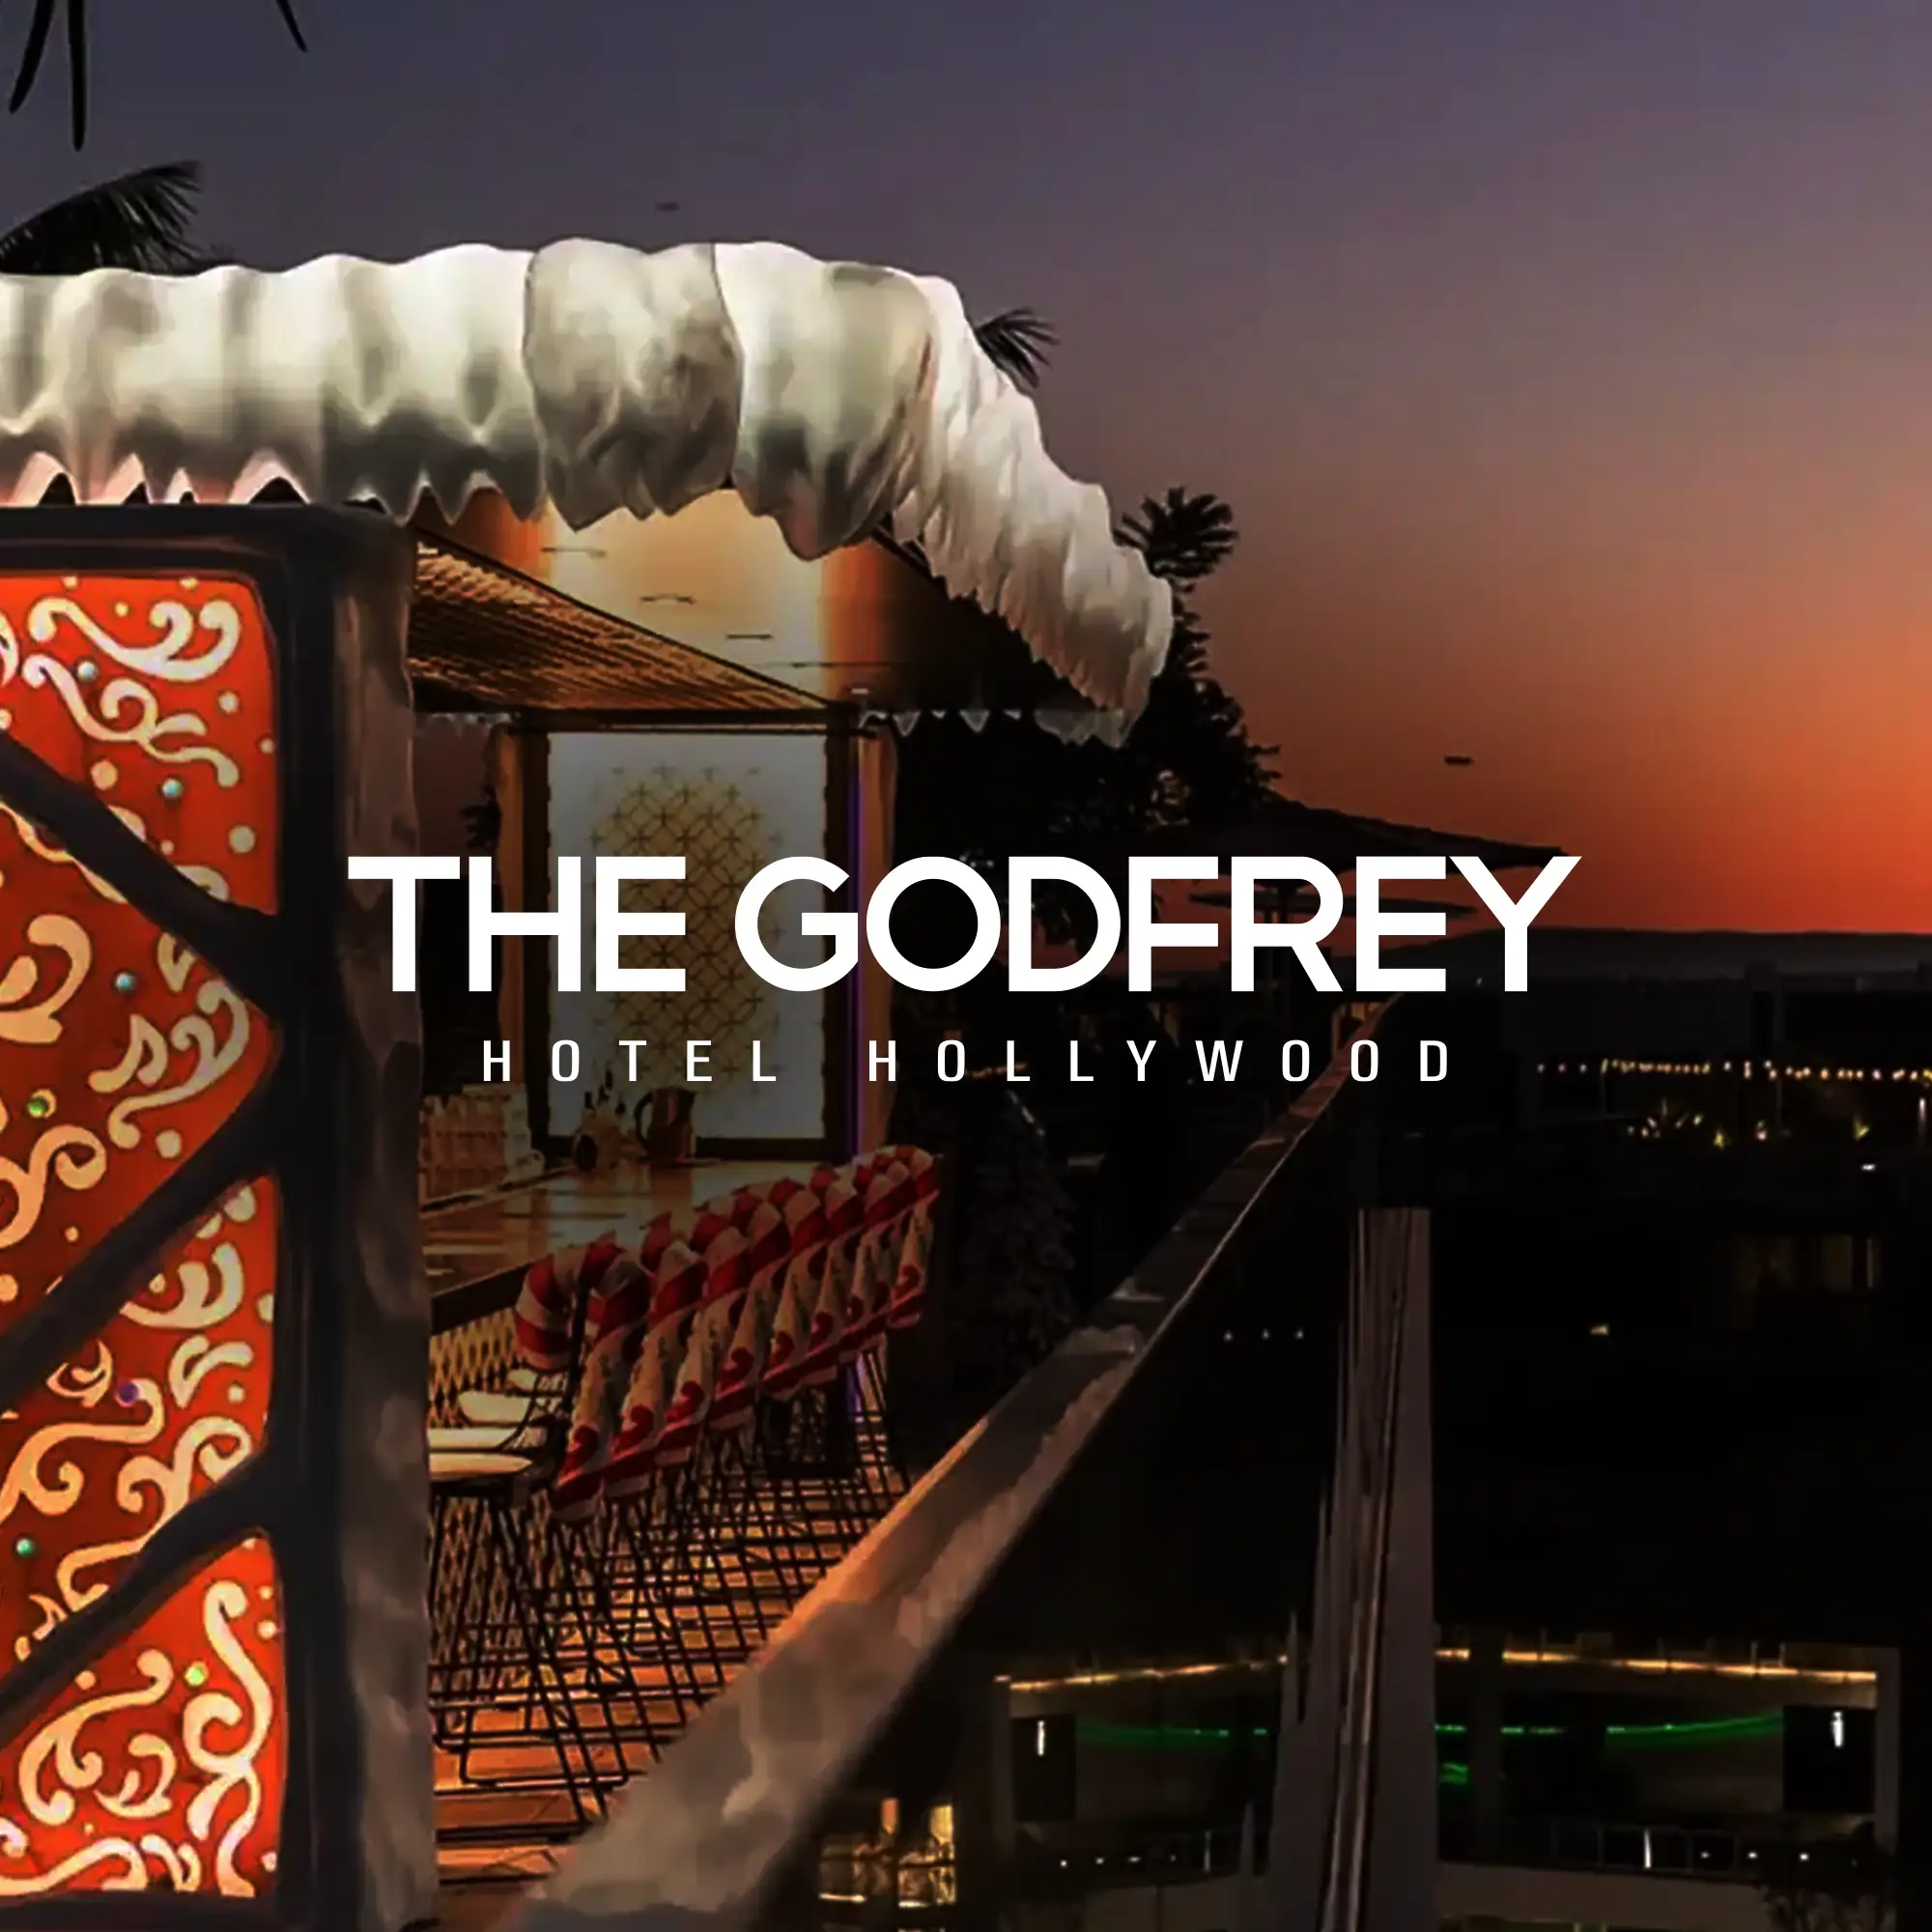 The Godfrey Hollywood